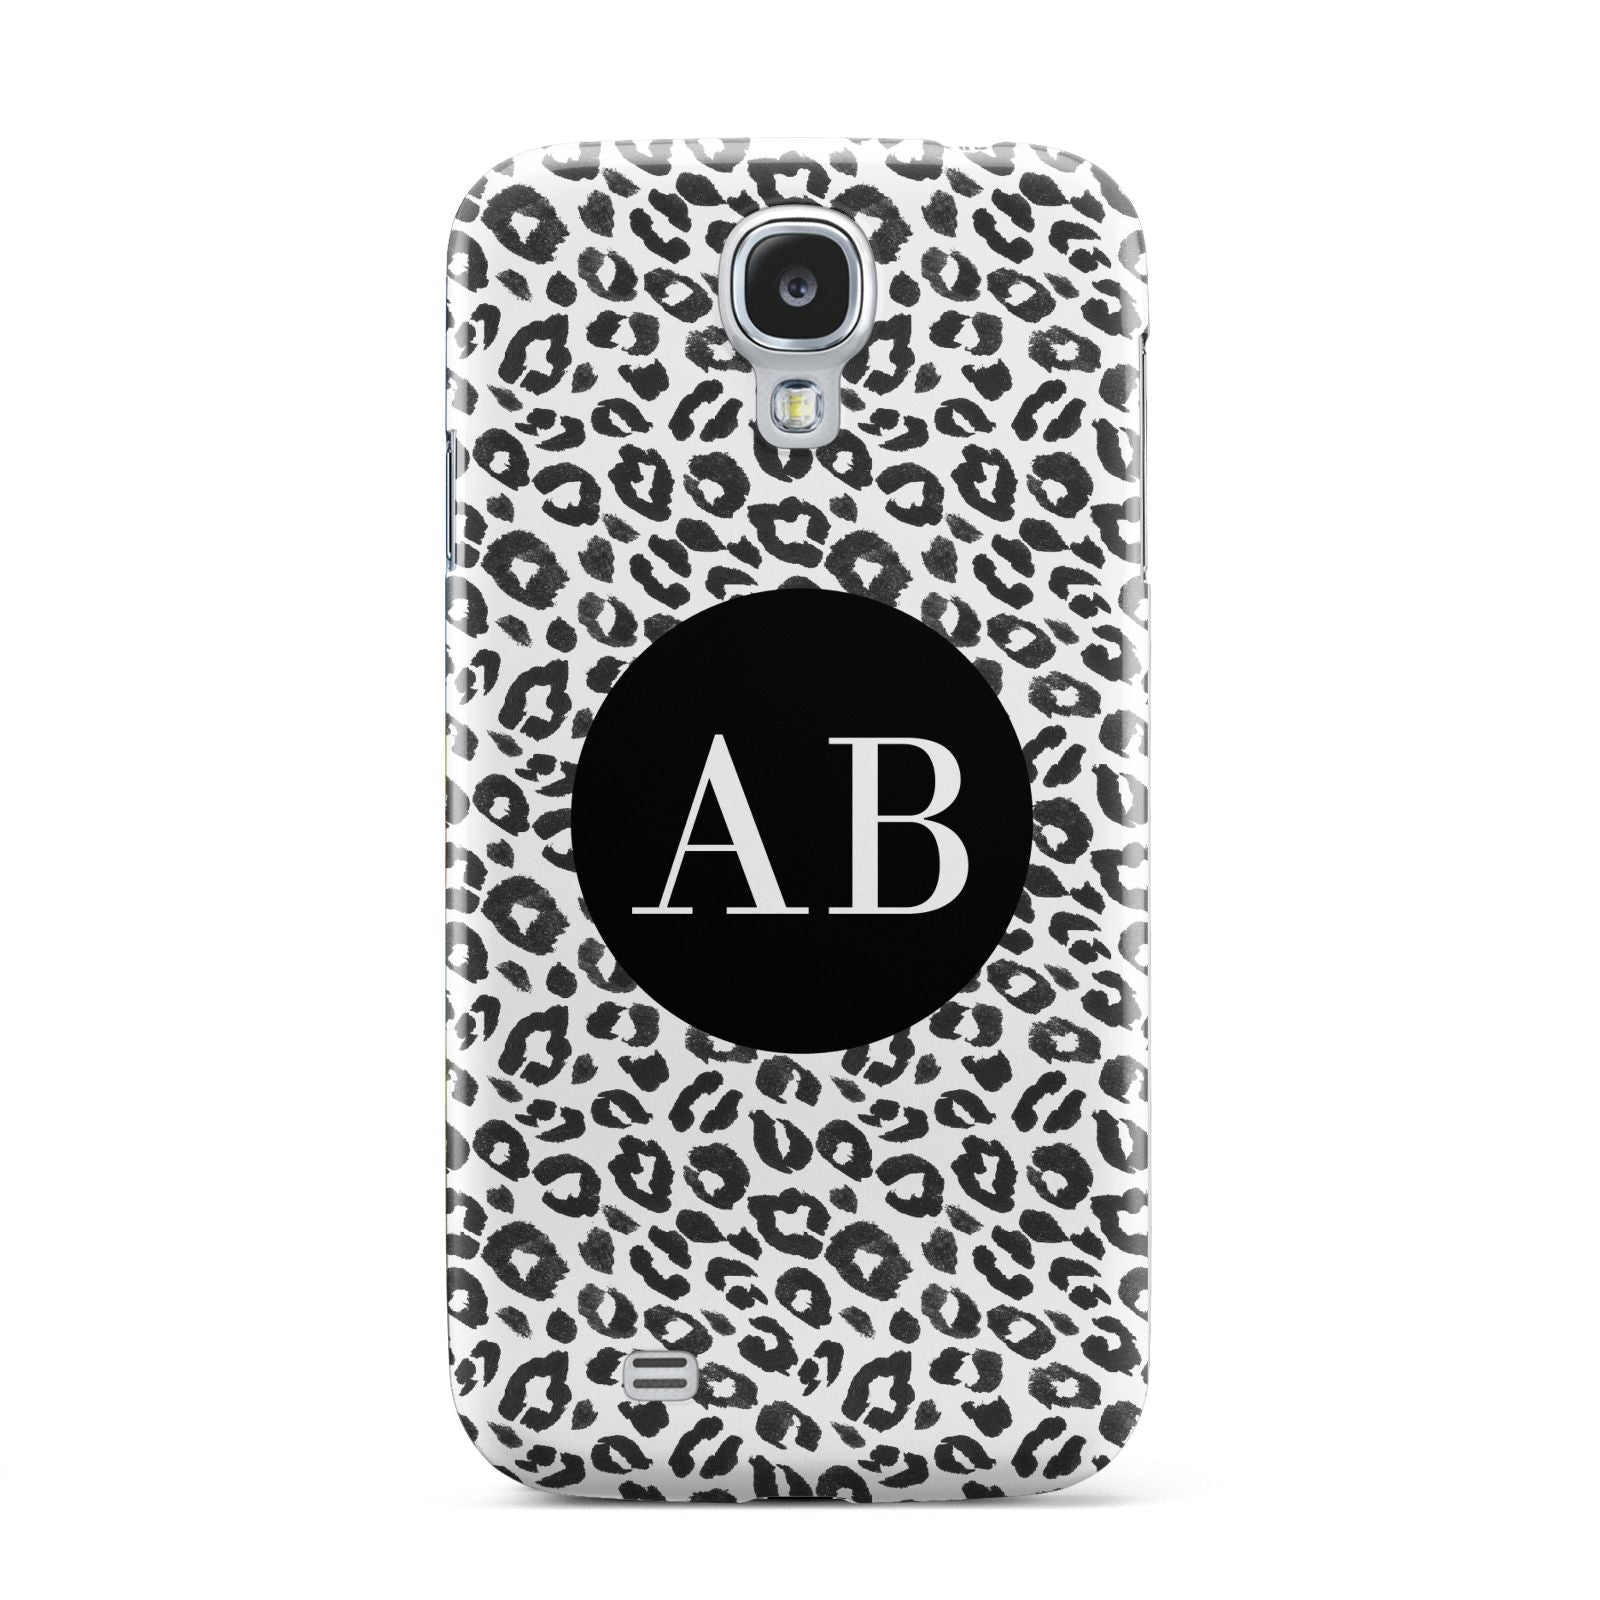 Leopard Print Black and White Samsung Galaxy S4 Case